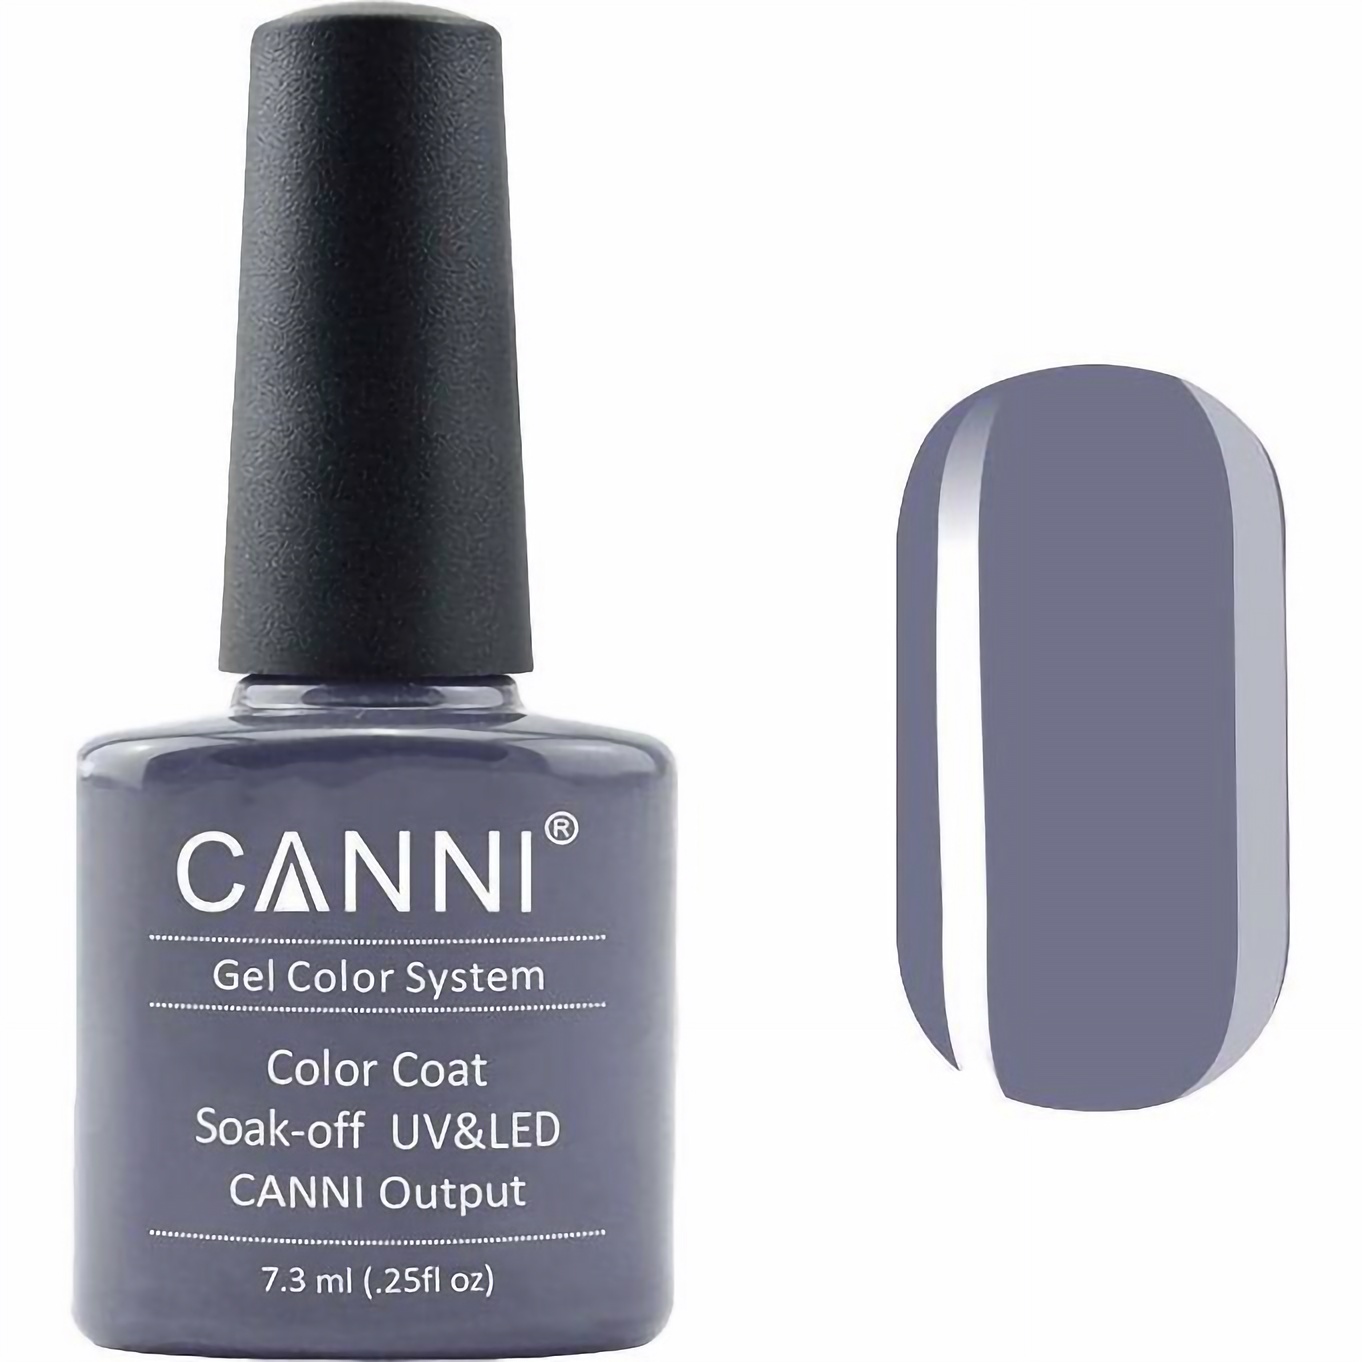 Гель-лак Canni Color Coat Soak-off UV&LED 228 світло-графітовий 7.3 мл - фото 1